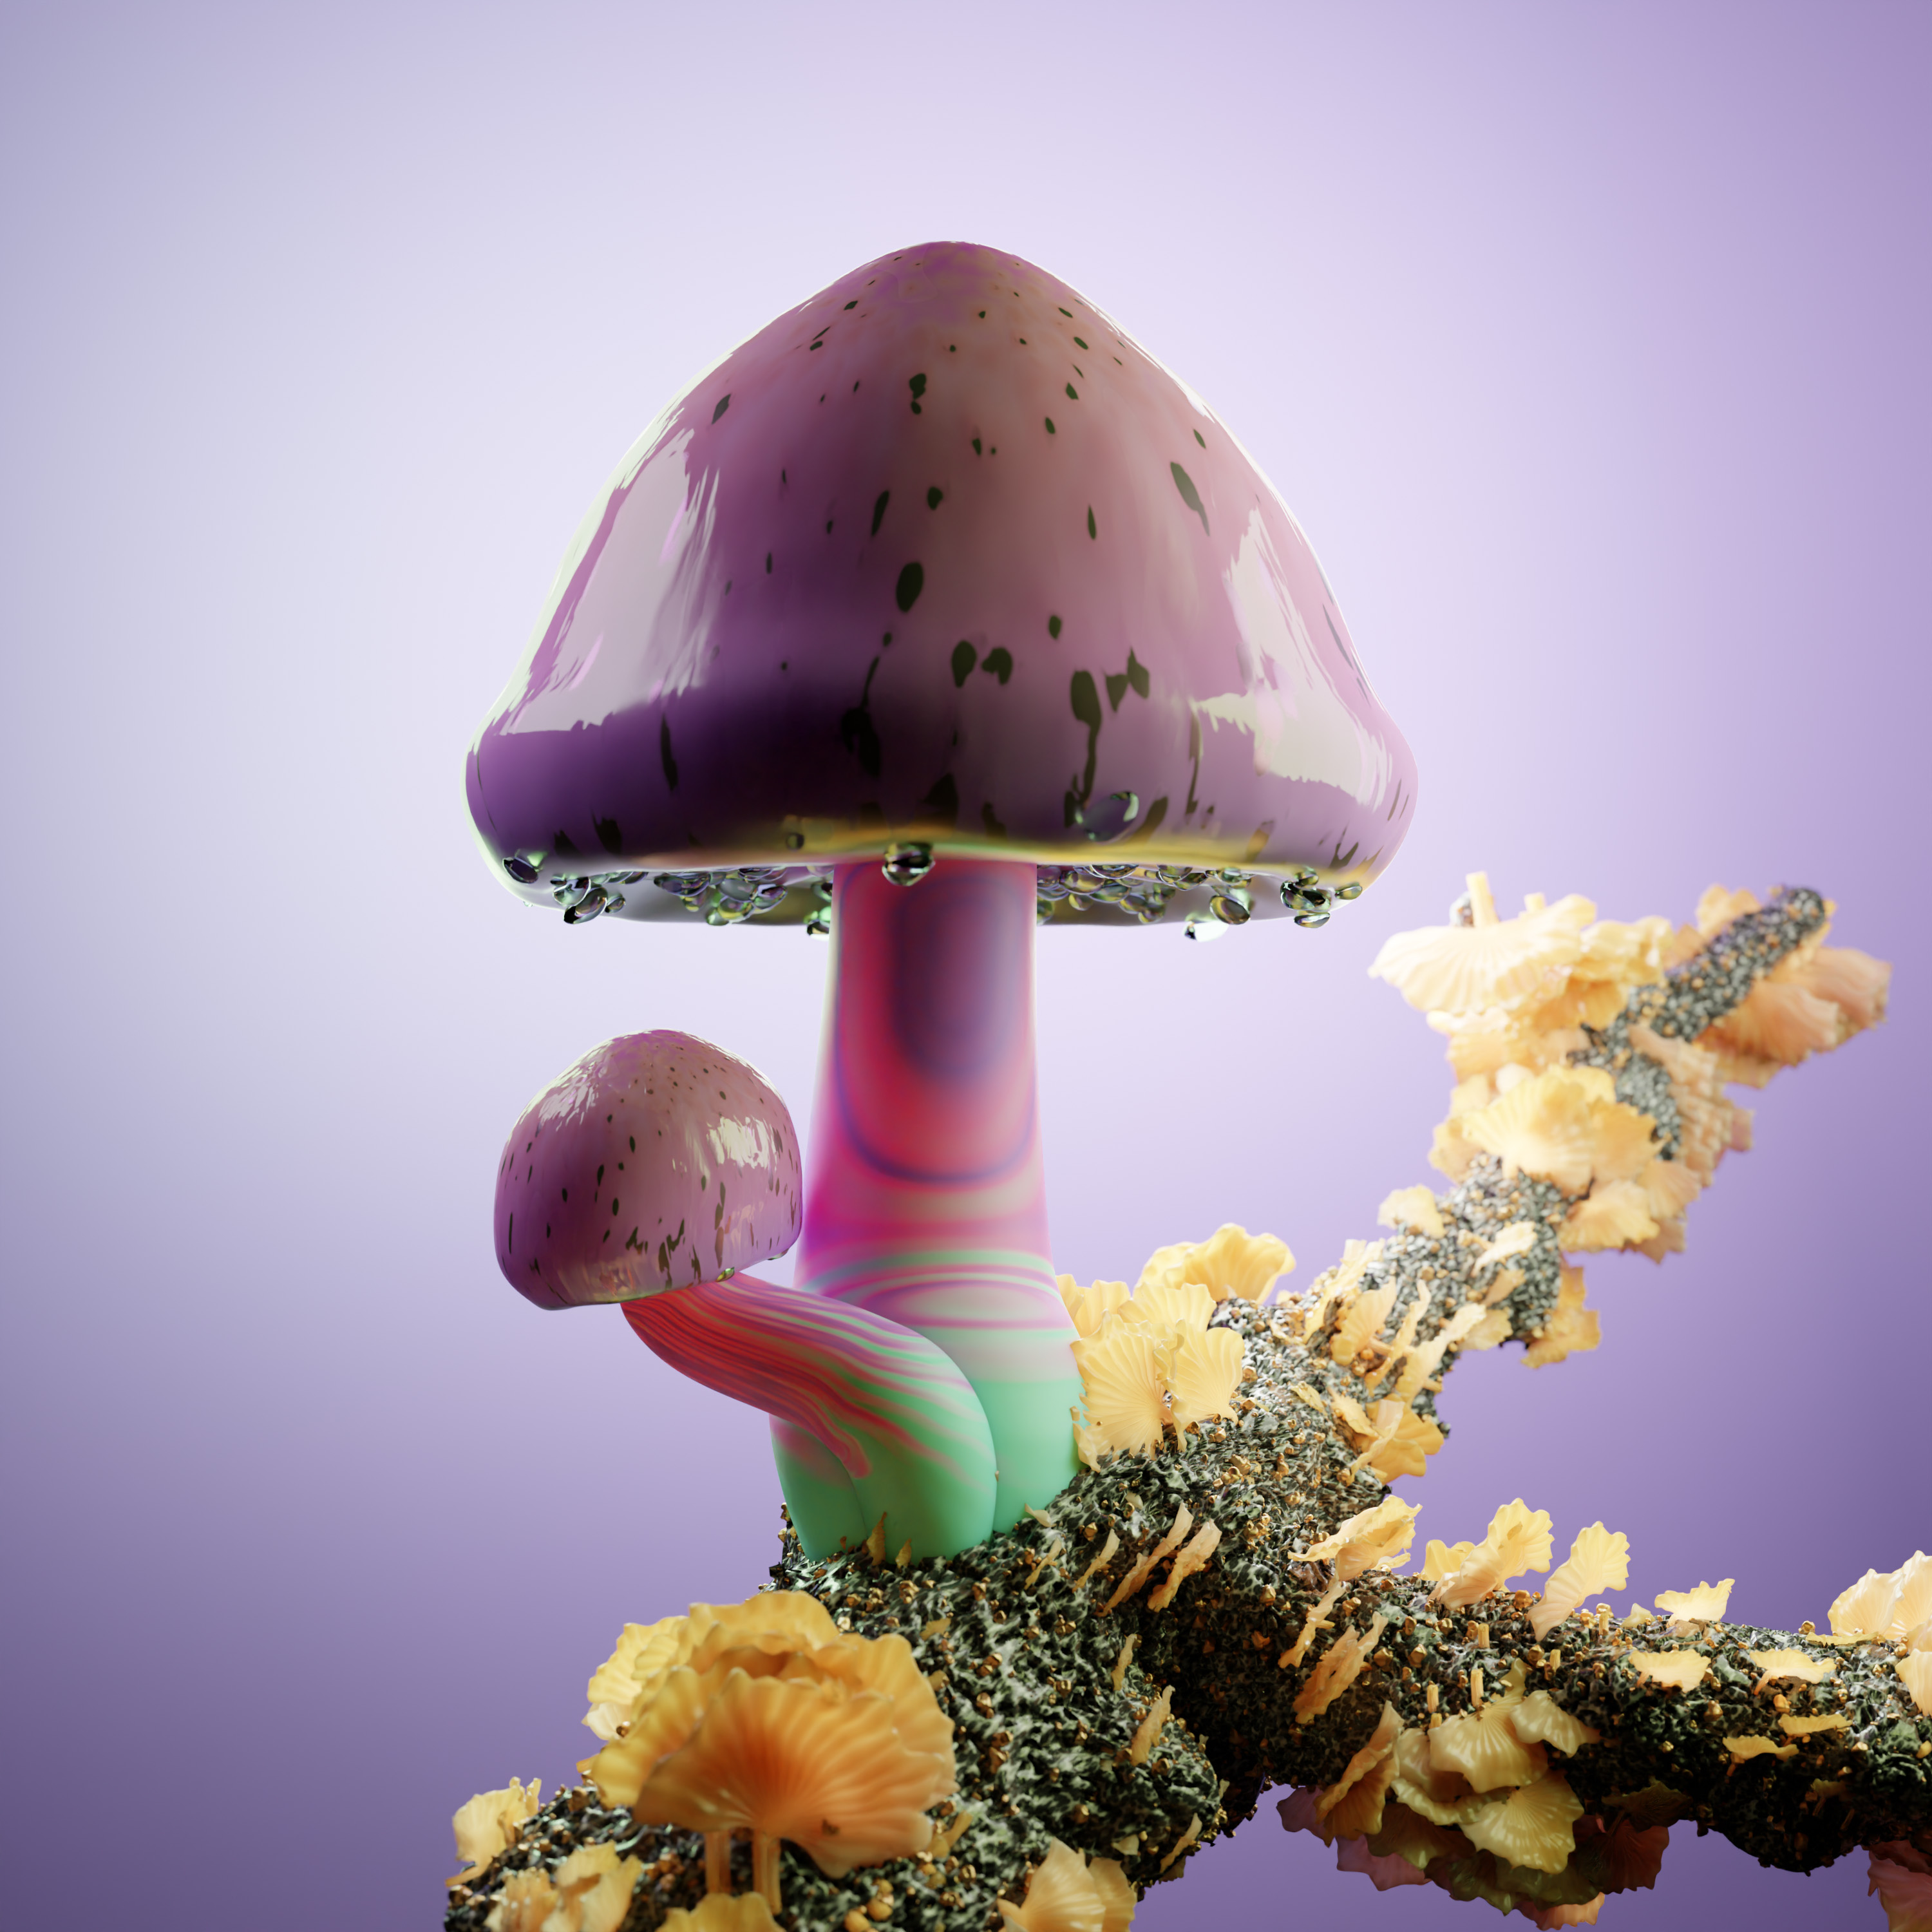 Rare Mushrooms | Foundation